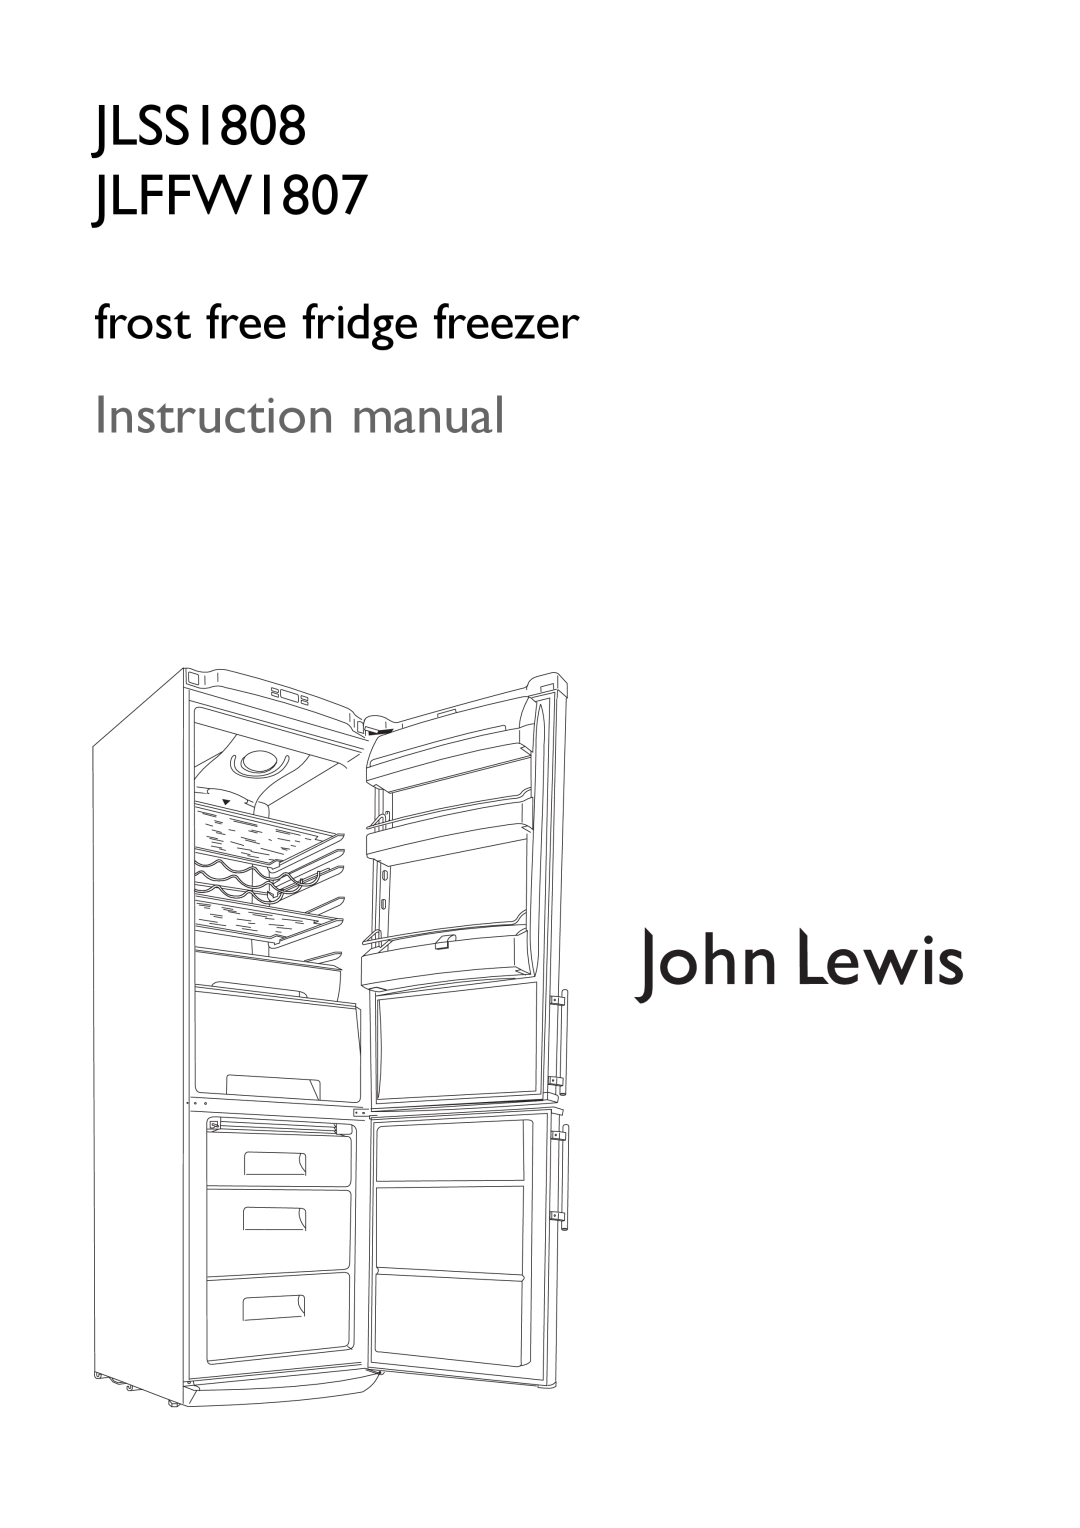 John Lewis instruction manual JLSS1808 JLFFW1807, Instruction manual, frost free fridge freezer 